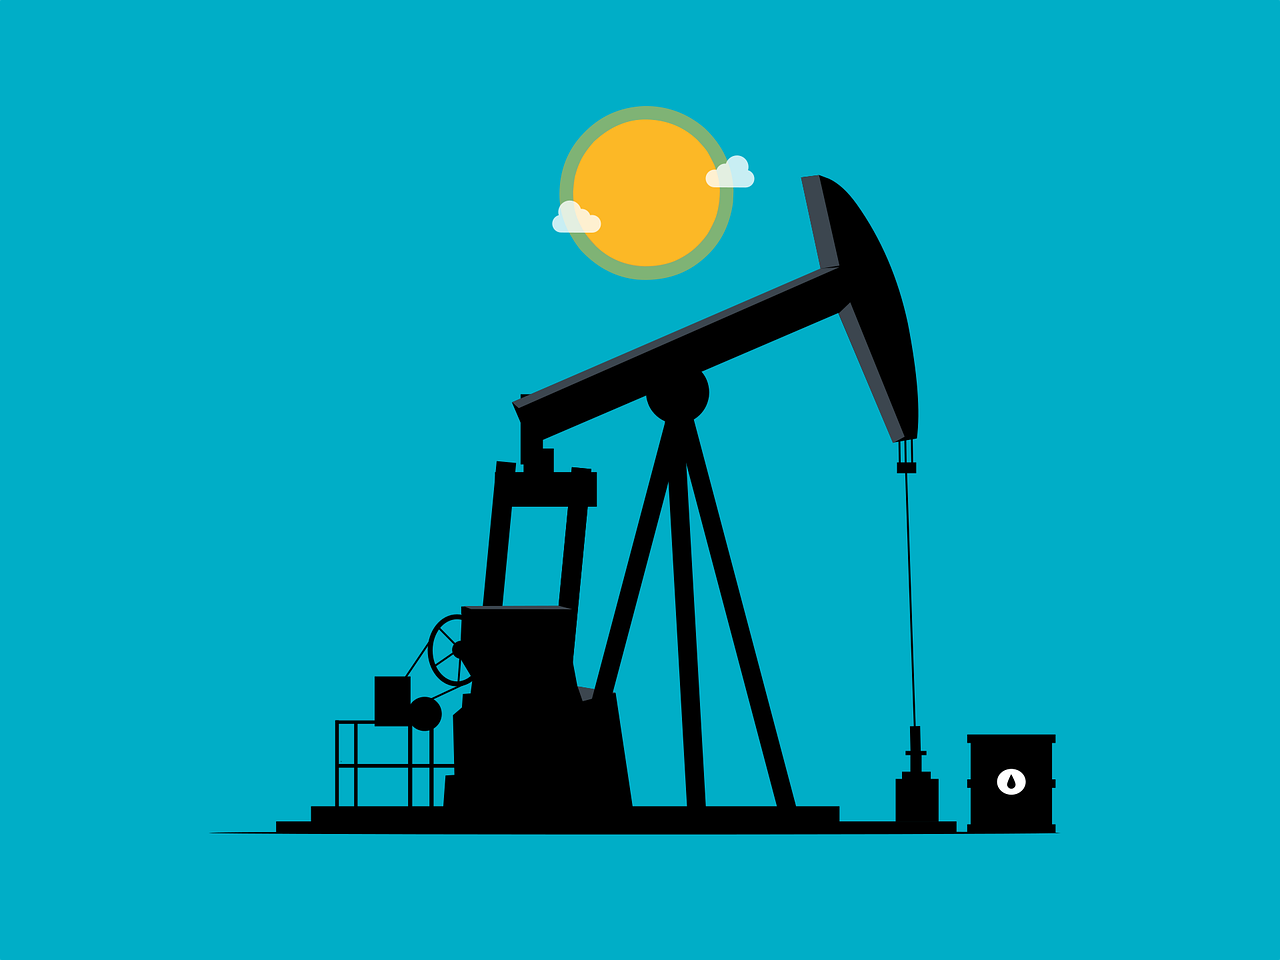 crude oil, oil well, crude oil extraction-7062211.jpg